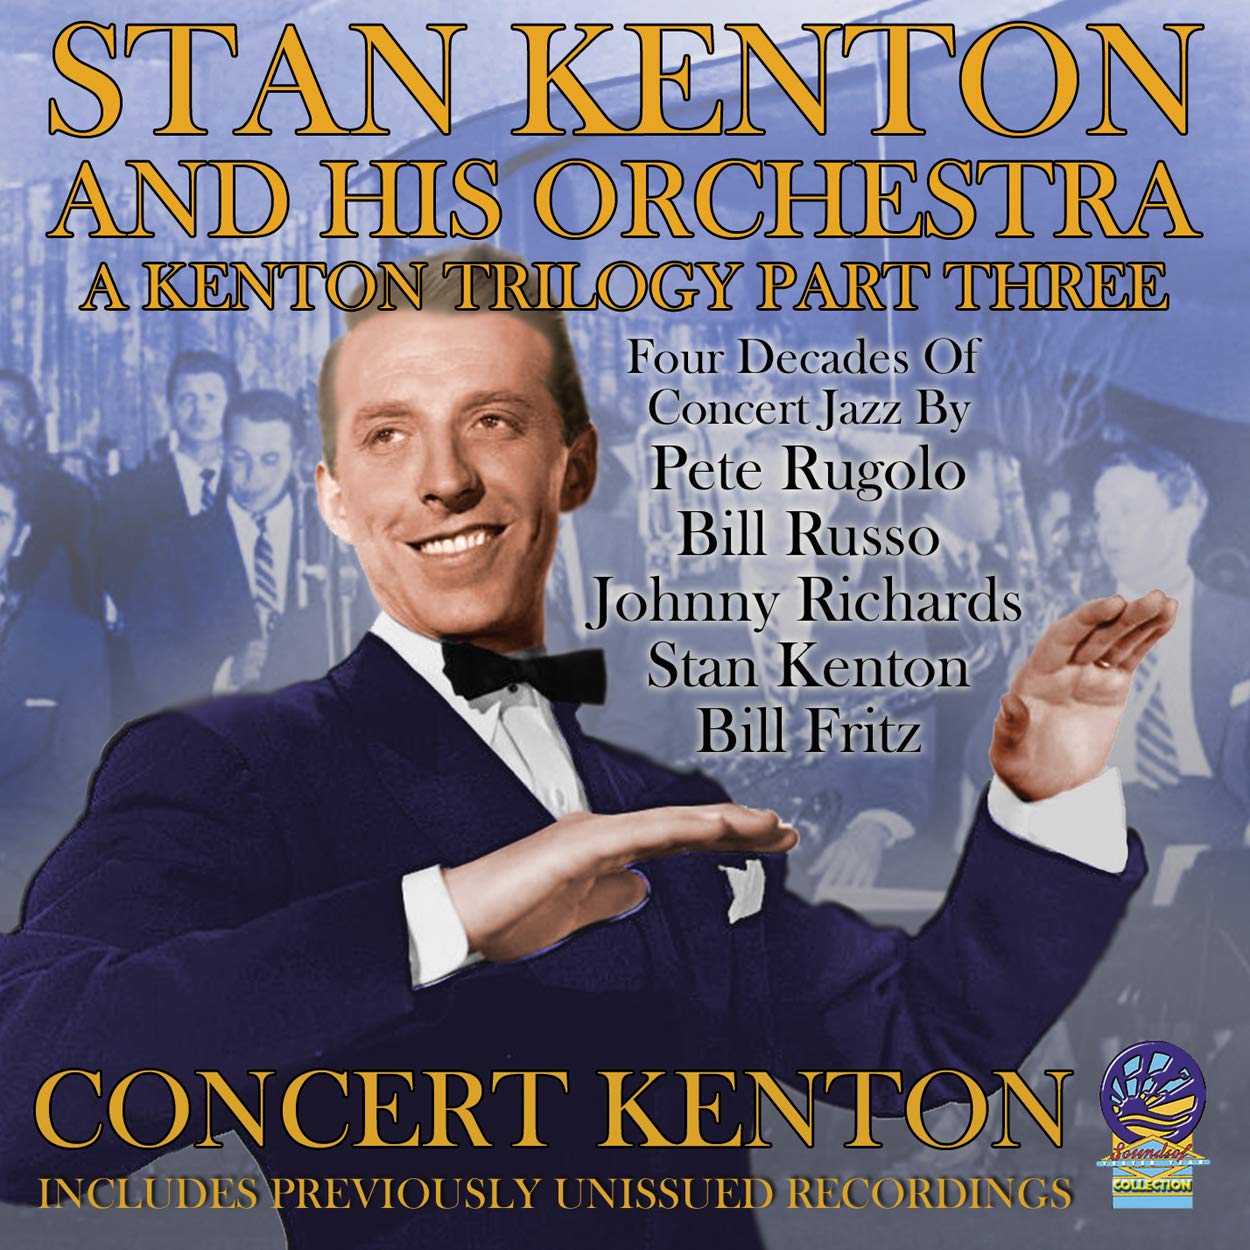 STAN KENTON - Kenton Trilogy Part Three cover 